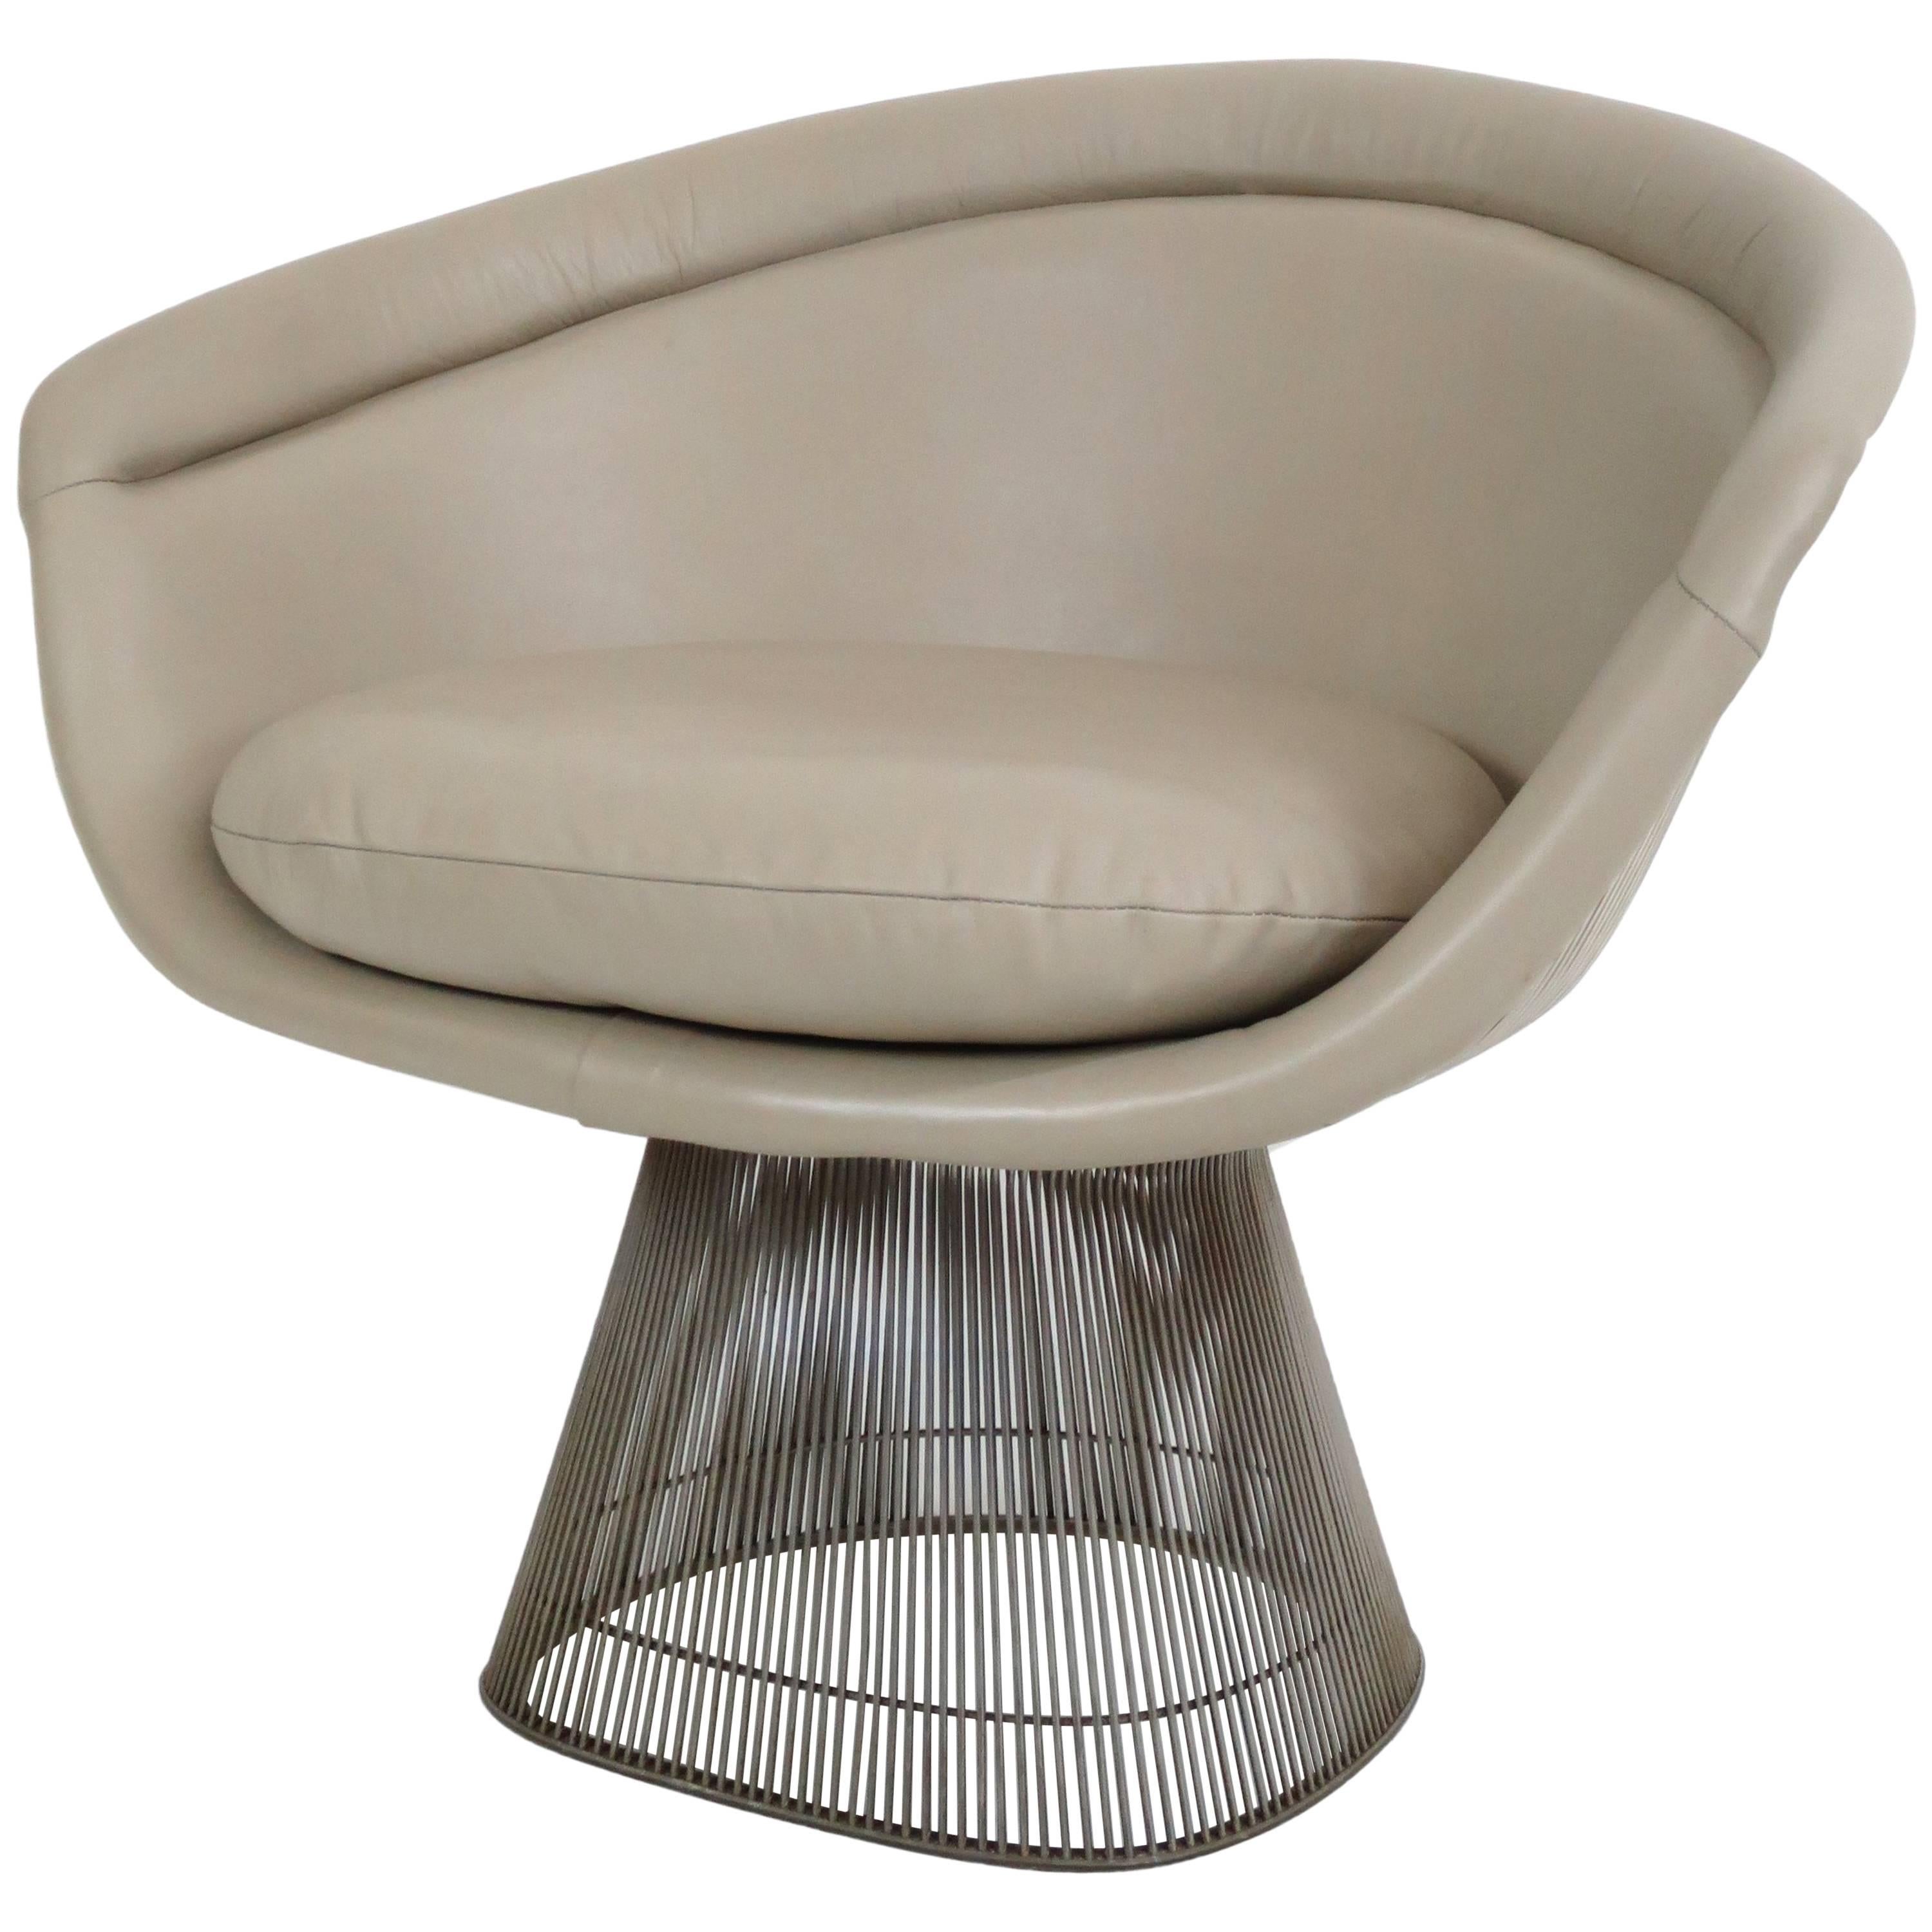 Warren Platner Lounge Chair for Knoll Inc